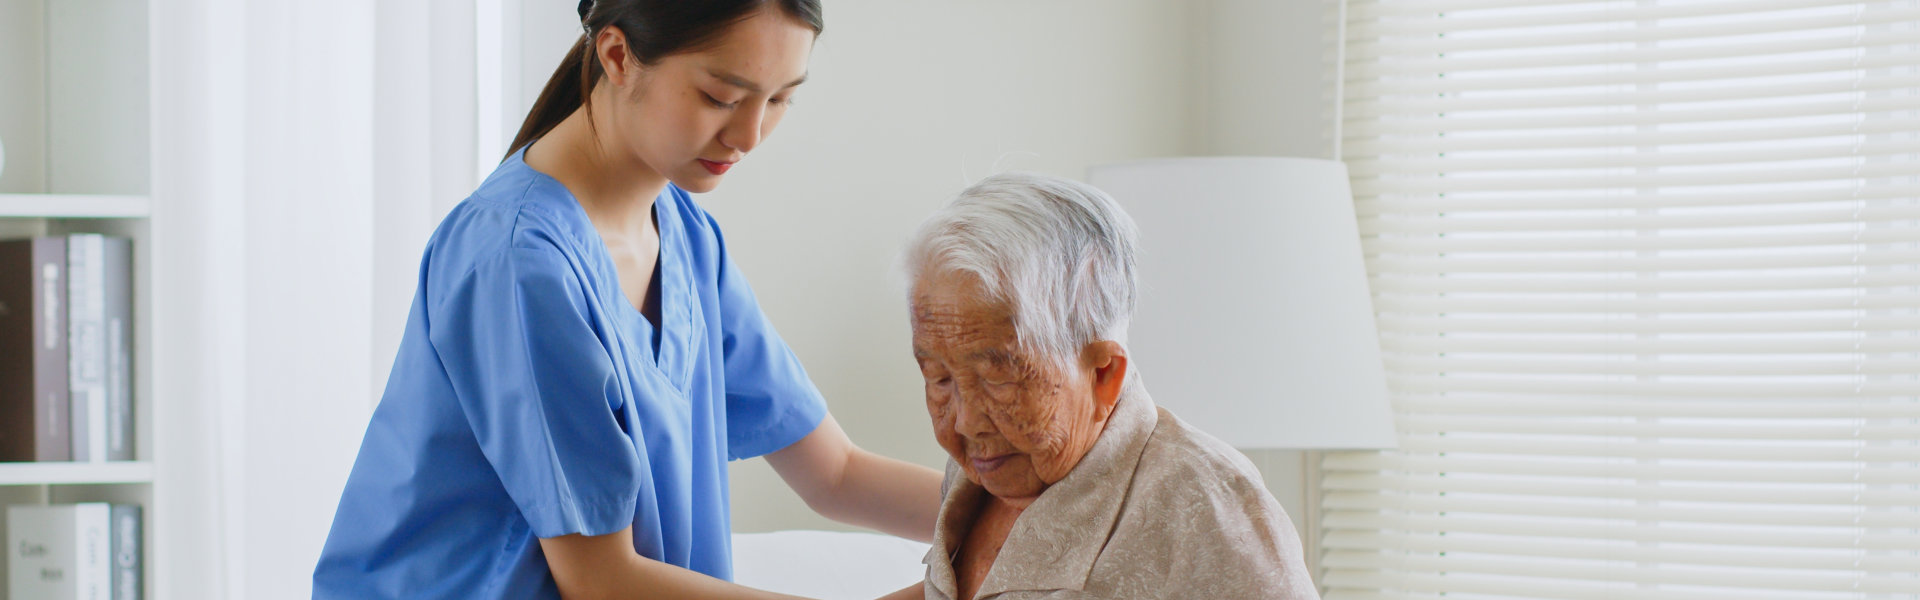 Caregiver assisting her elderly patient